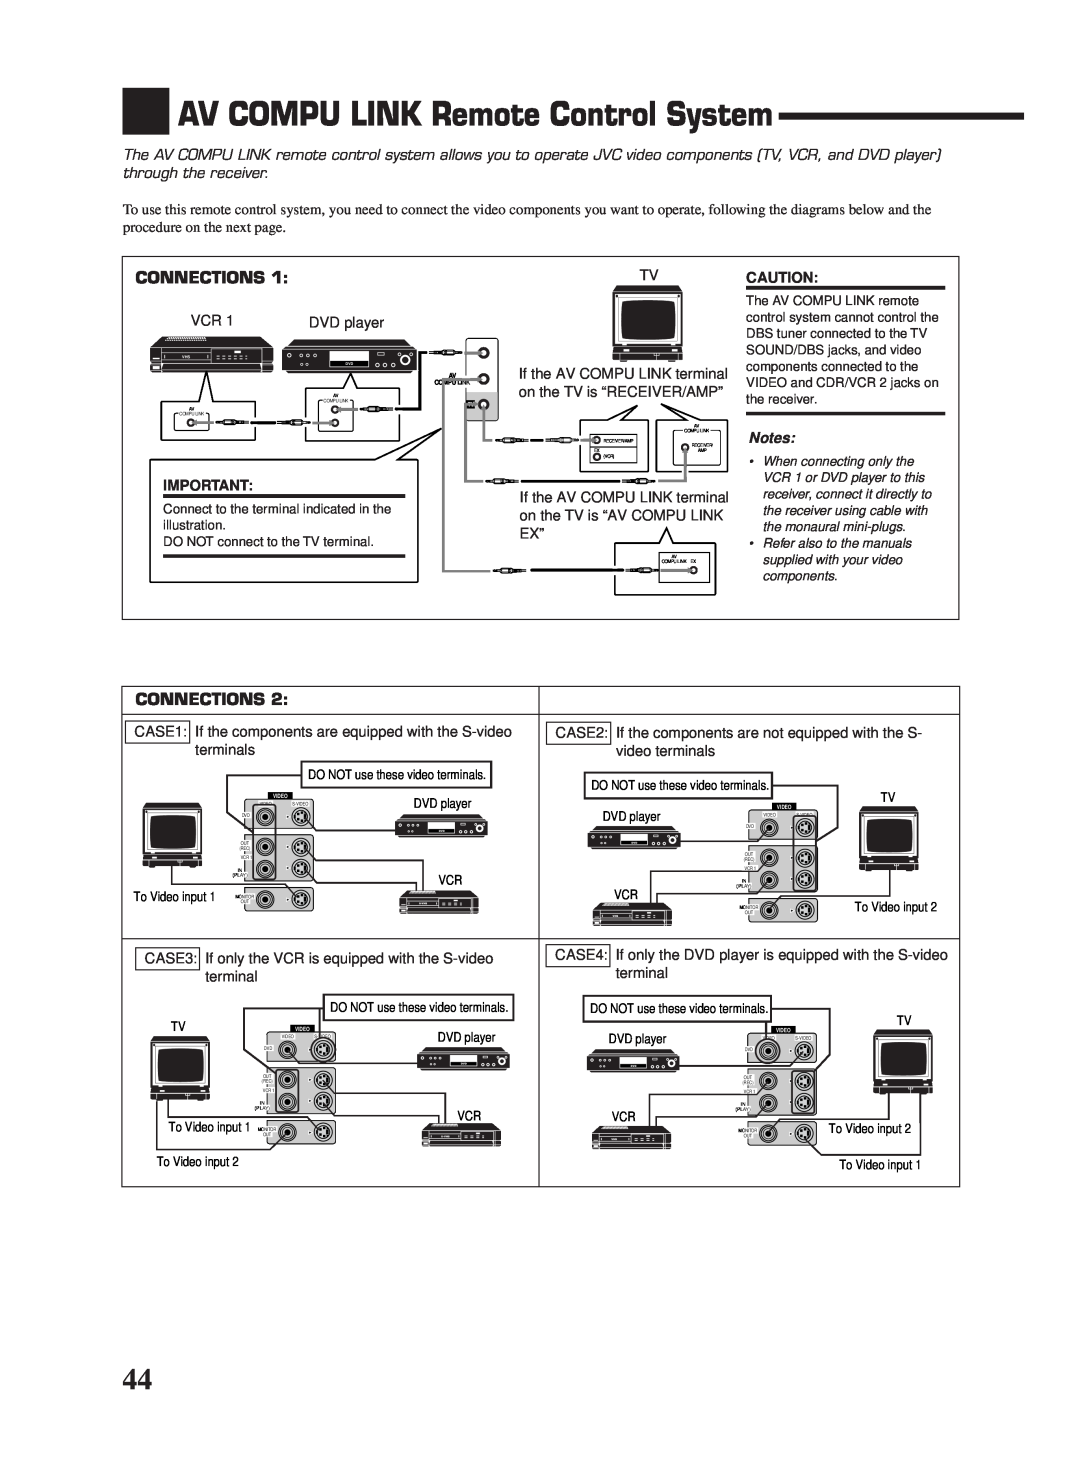 JVC RX-8000VBK manual AV COMPU LINK Remote Control System, Connections 